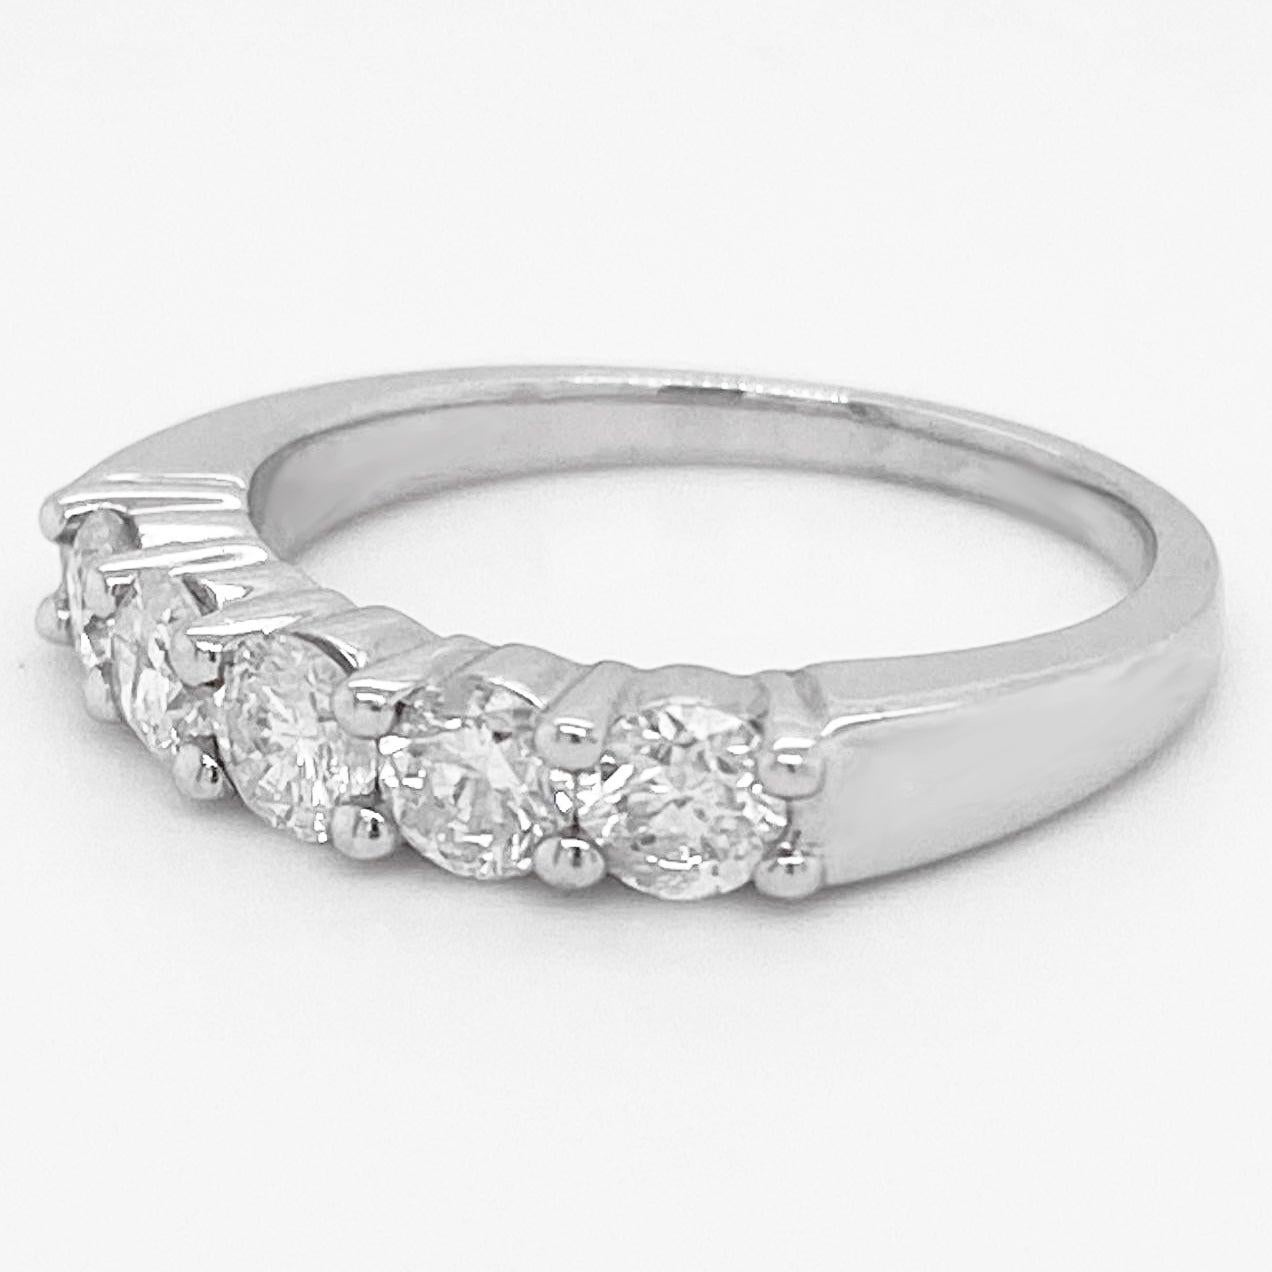 For Sale:  Five Diamond Band Ring, White Gold, 1.00 Carat Diamonds, Wedding Band 3